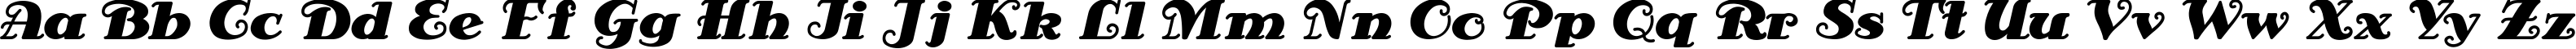 Пример написания английского алфавита шрифтом AntsyPants